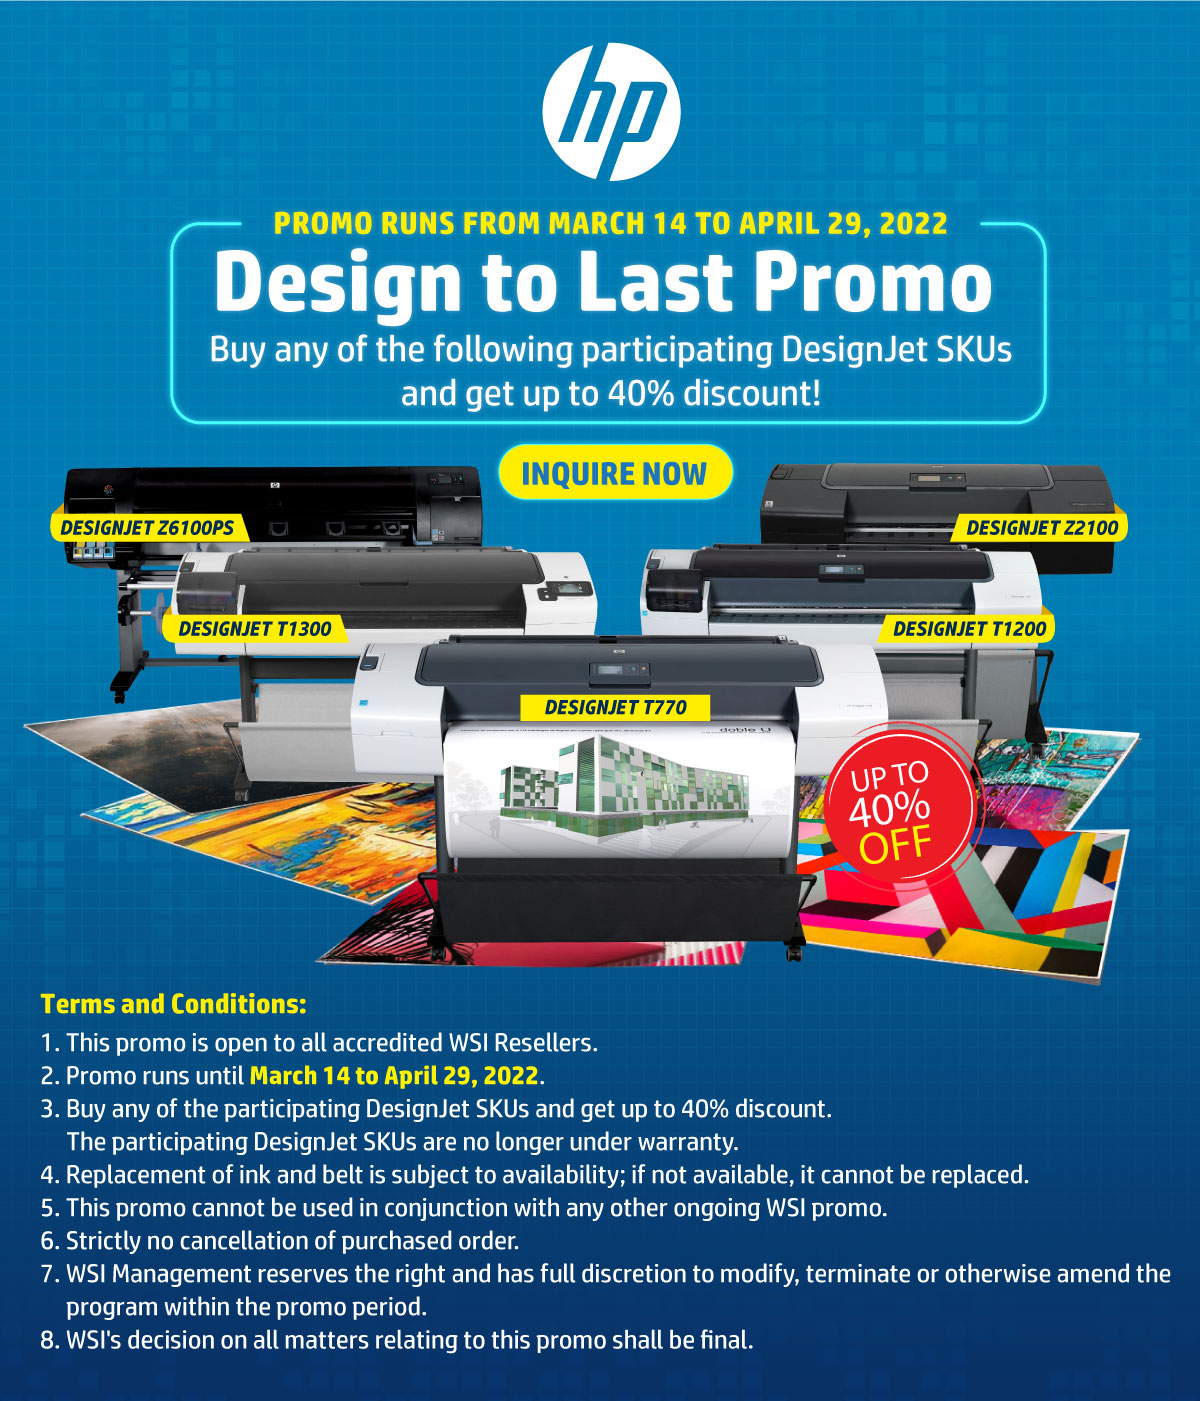 HP Design to Last Promo